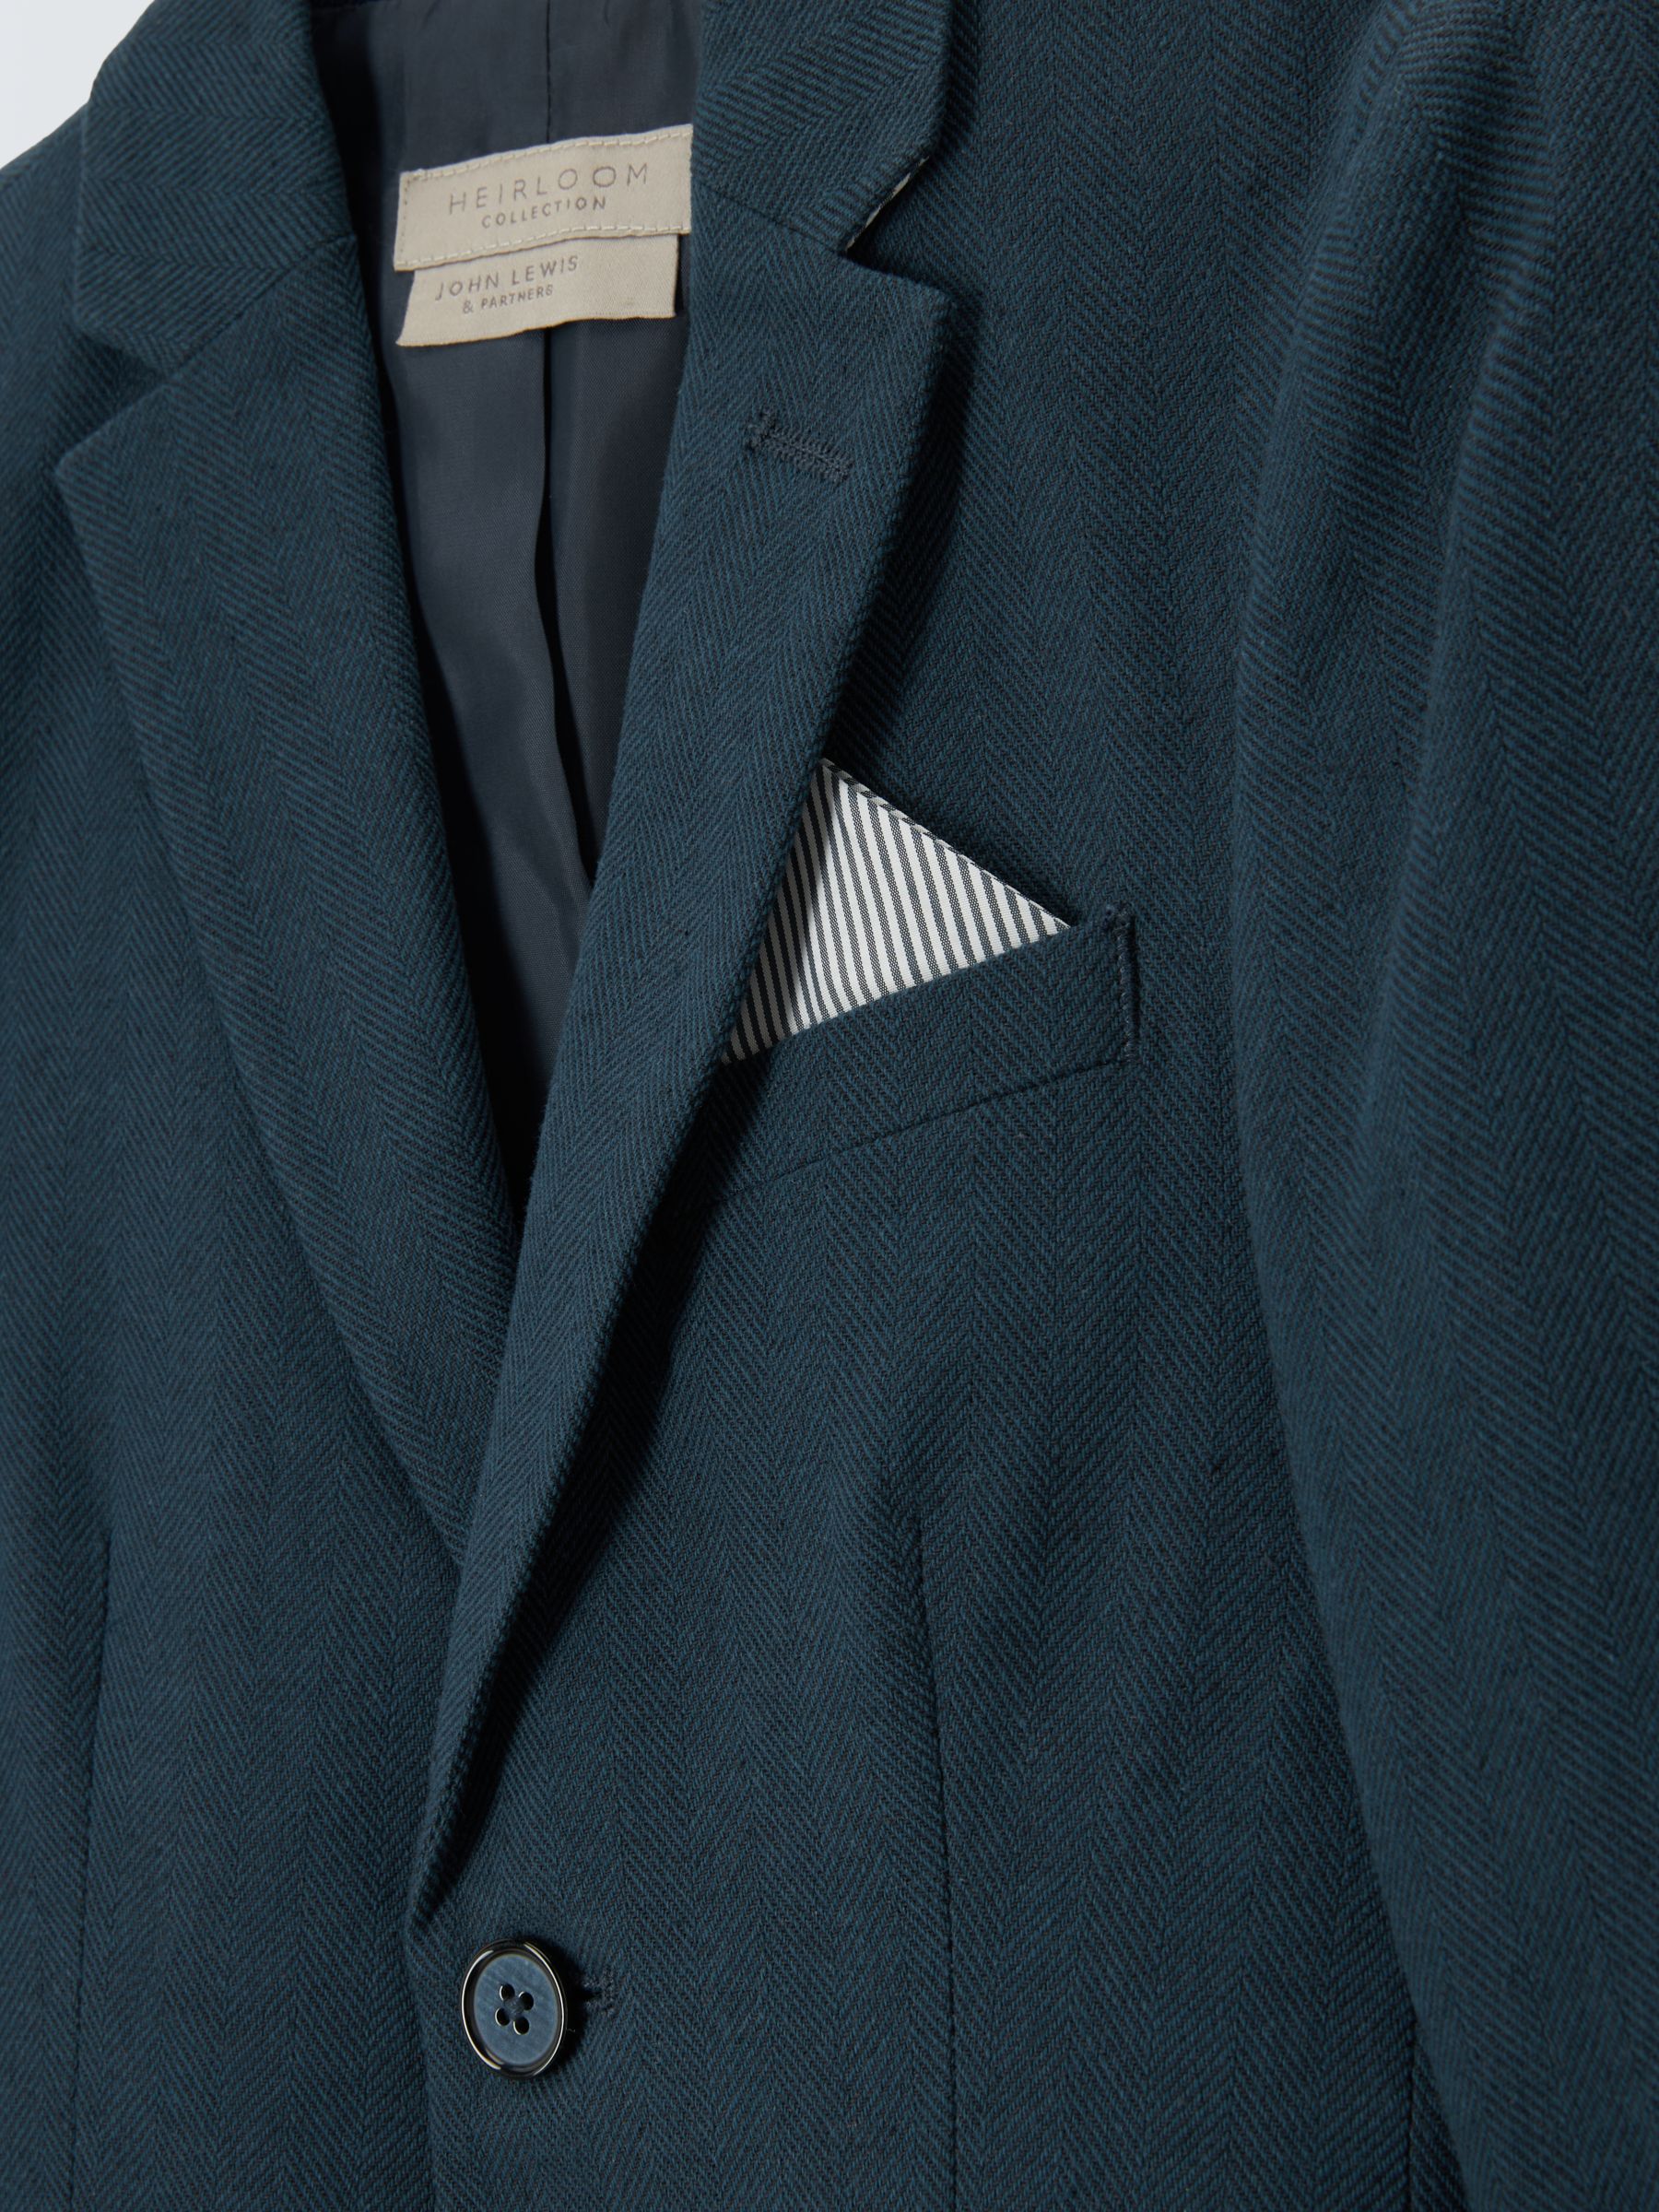 John Lewis Heirloom Collection Kids' Linen Blend Suit Jacket, Navy, 3 years